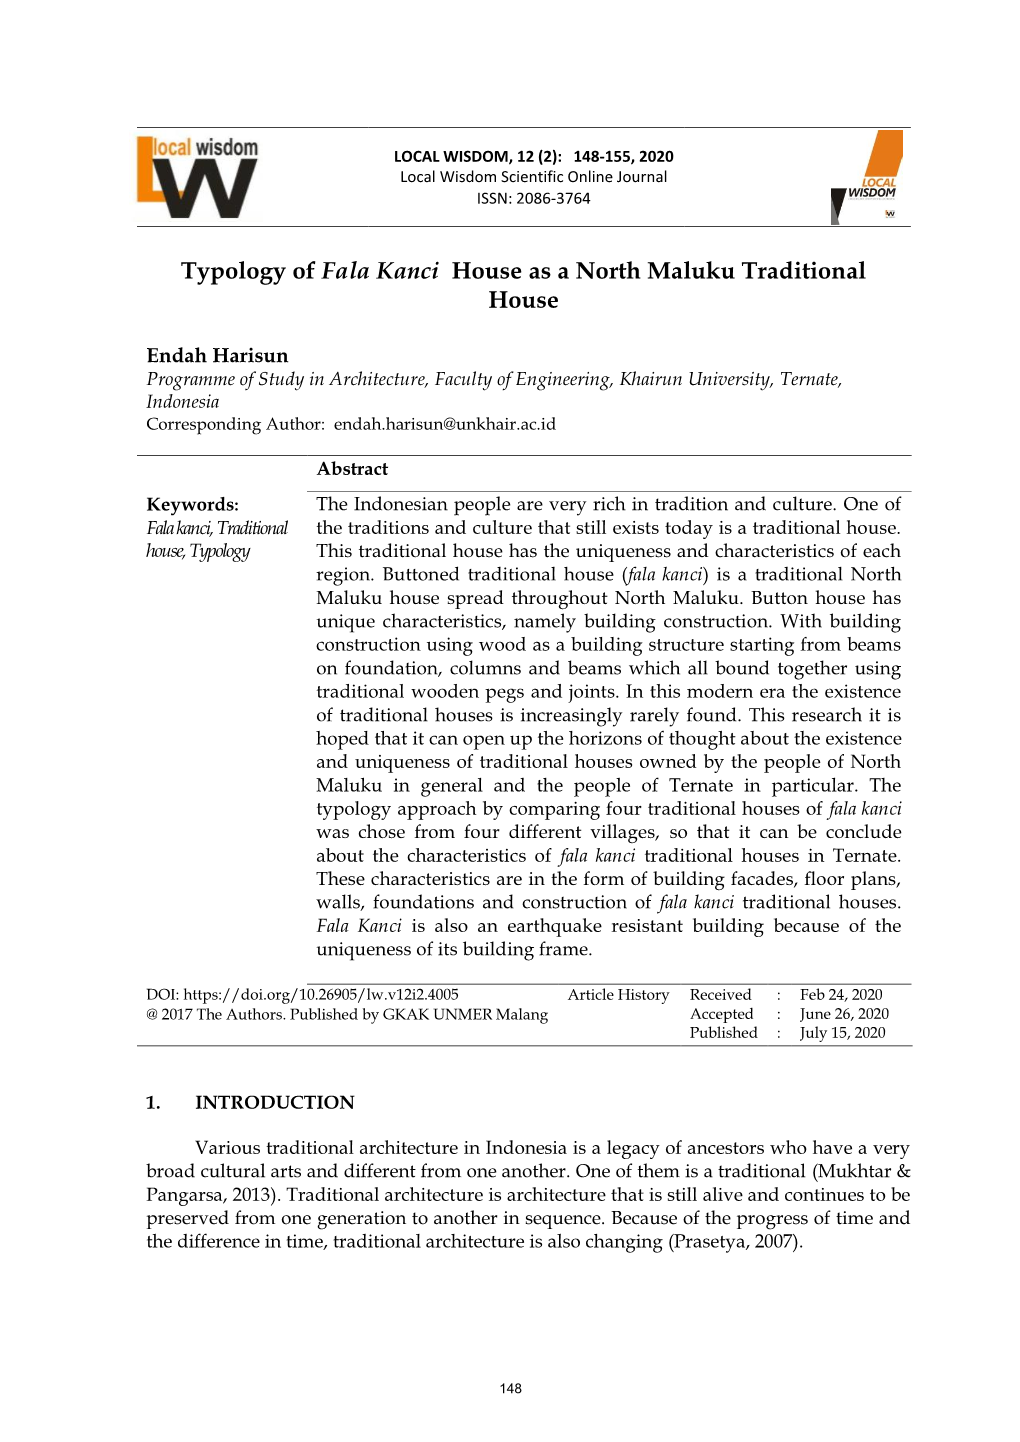 Typology of Fala Kanci House As a North Maluku Traditional House